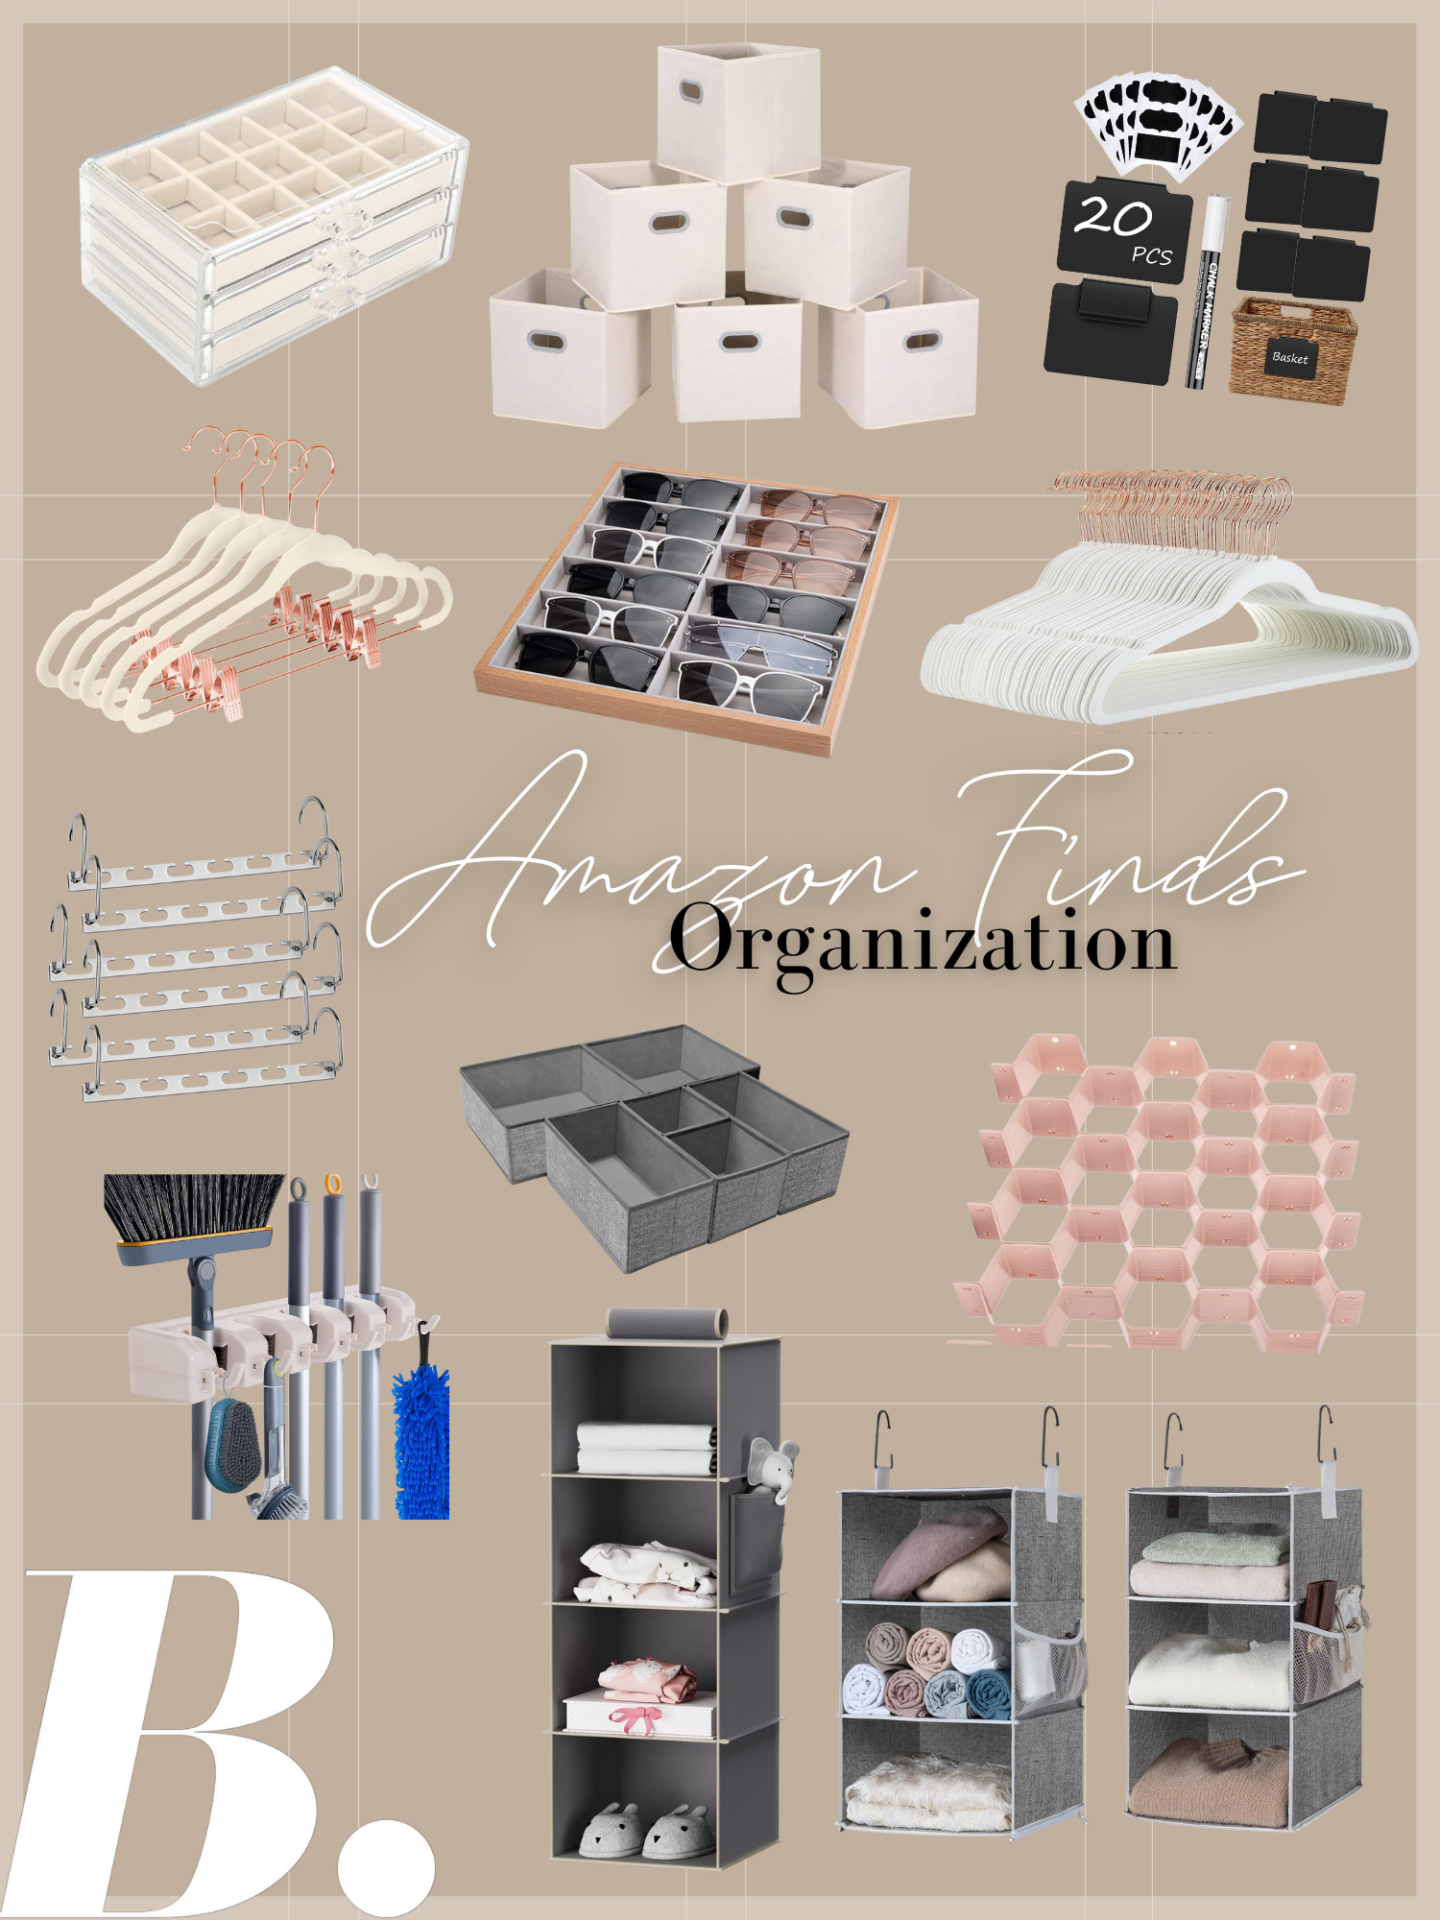 Amazon Organization items